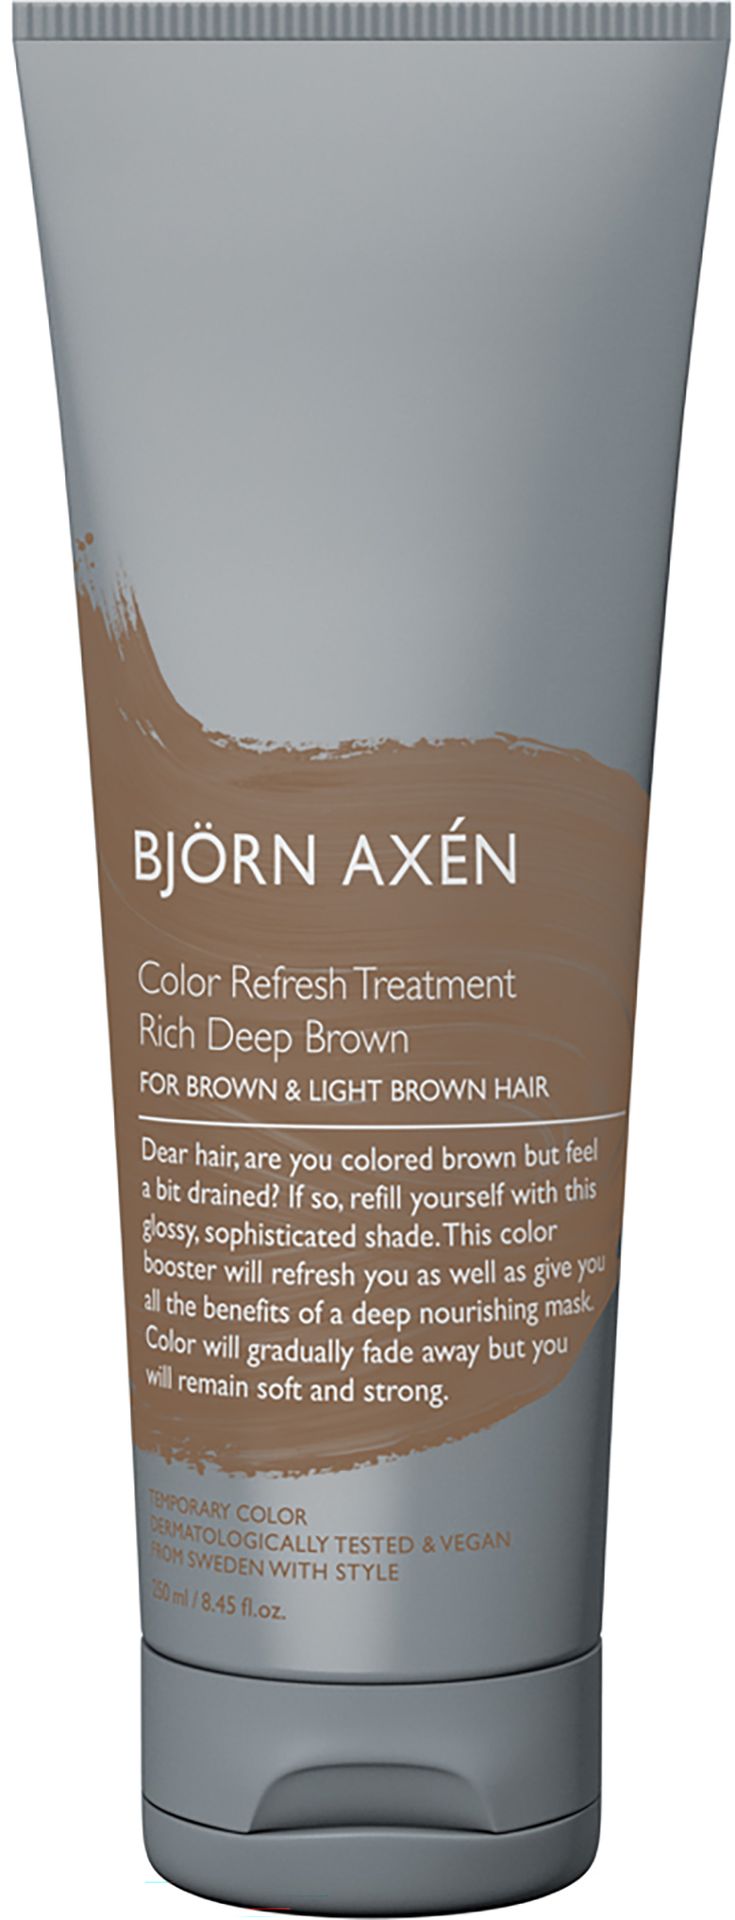 Björn Axen Color Refresh Treatment Rich Deep Brown